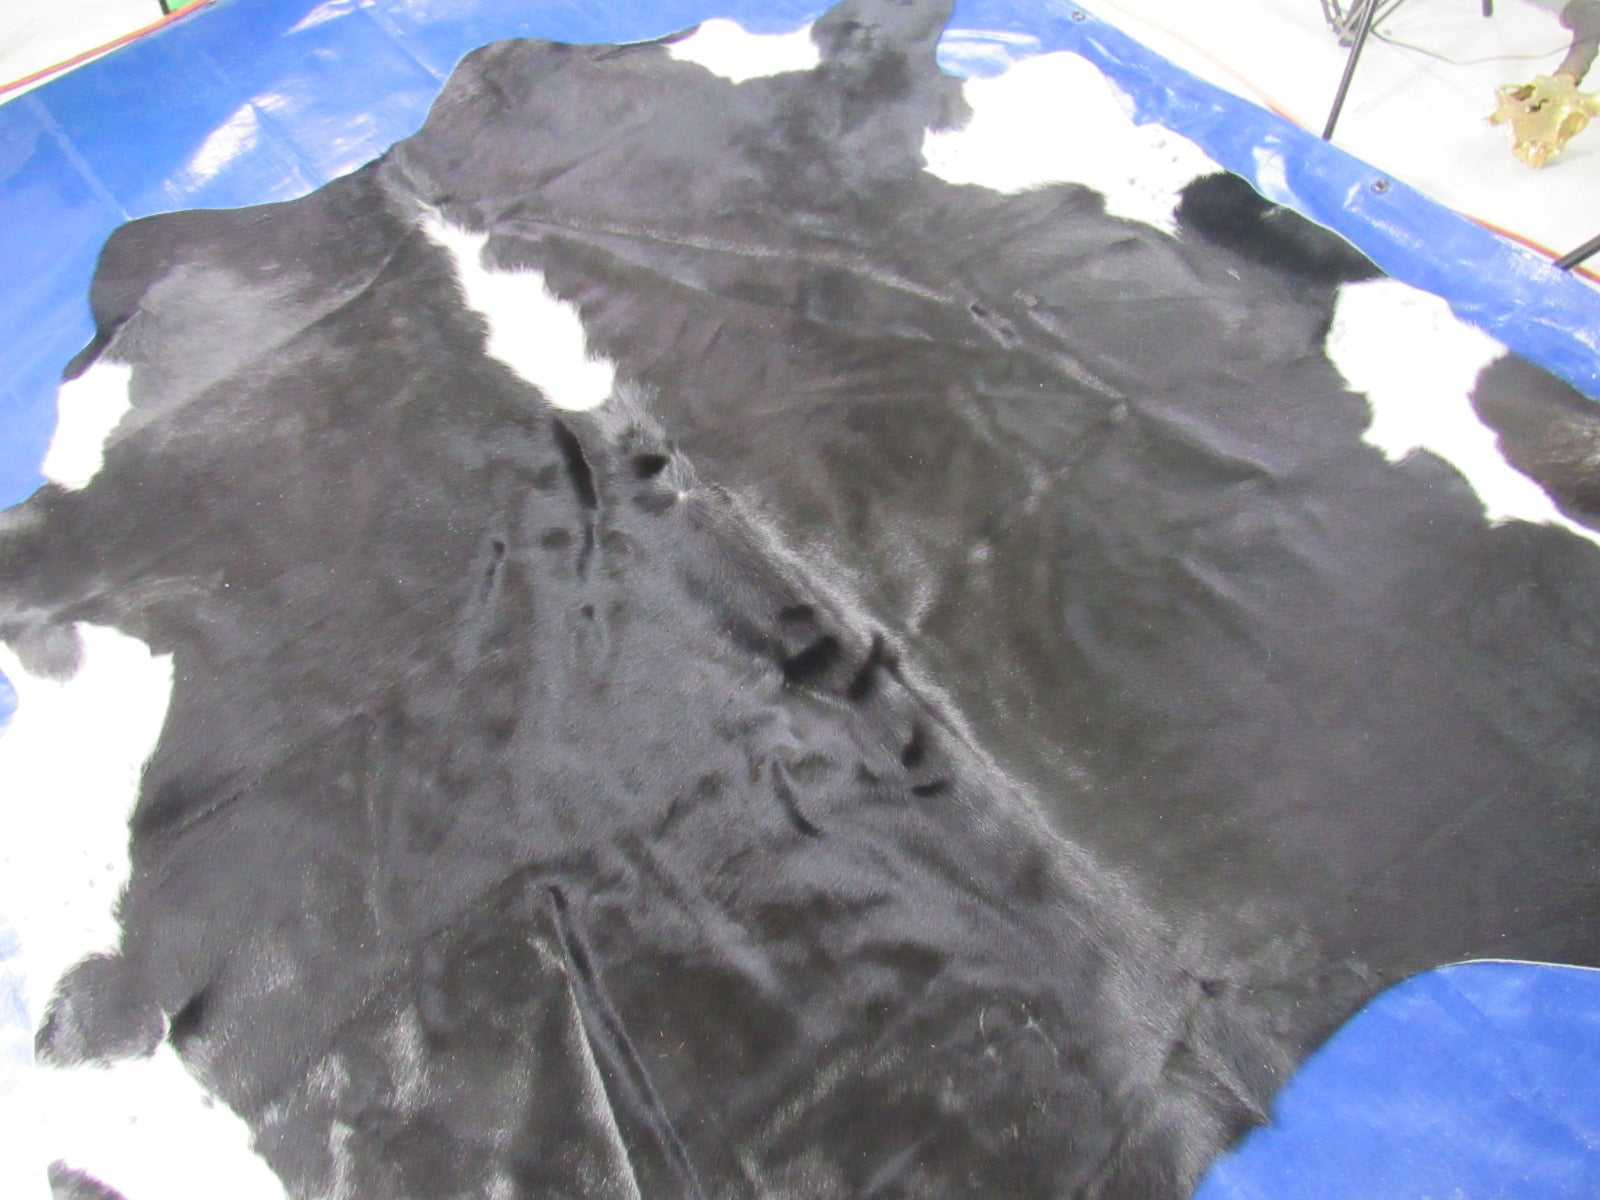 Black Hereford Cowhide Rug - Size: 7.7x7.7 feet M-1541